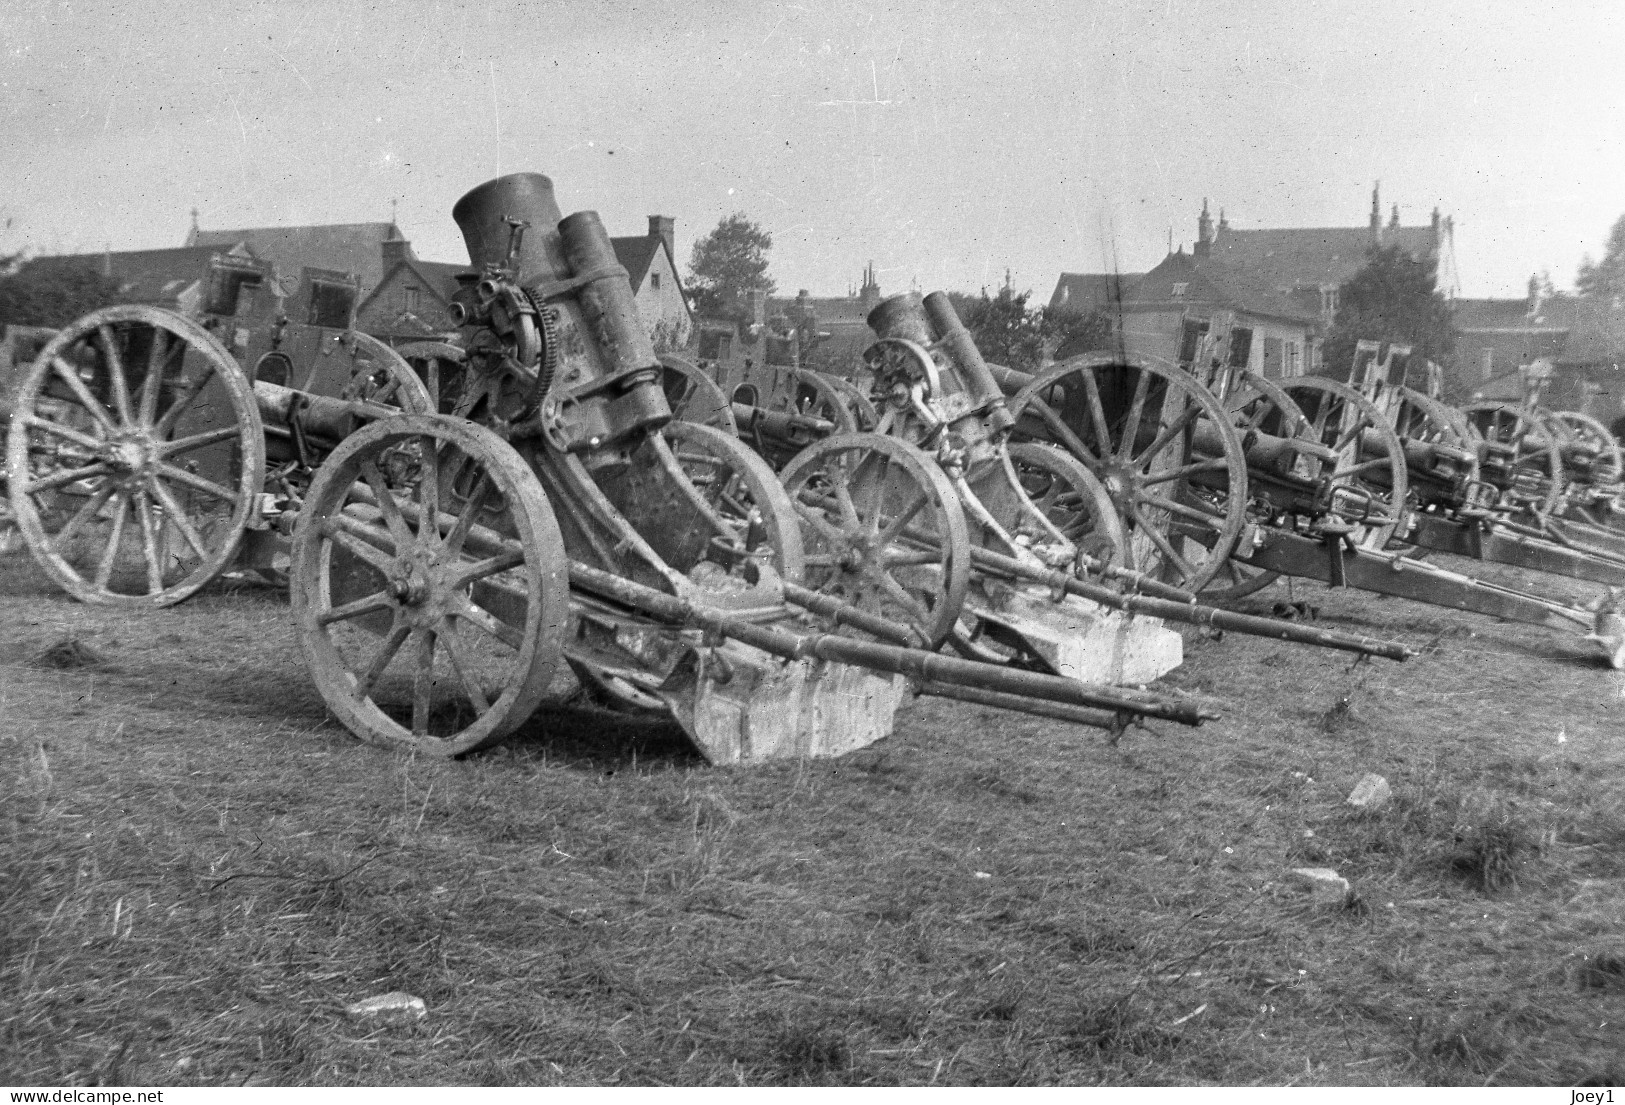 Photo Grande Guerre Format 13/18 Tirage Contemporain Argentique ,artillerie. - Guerra, Militari